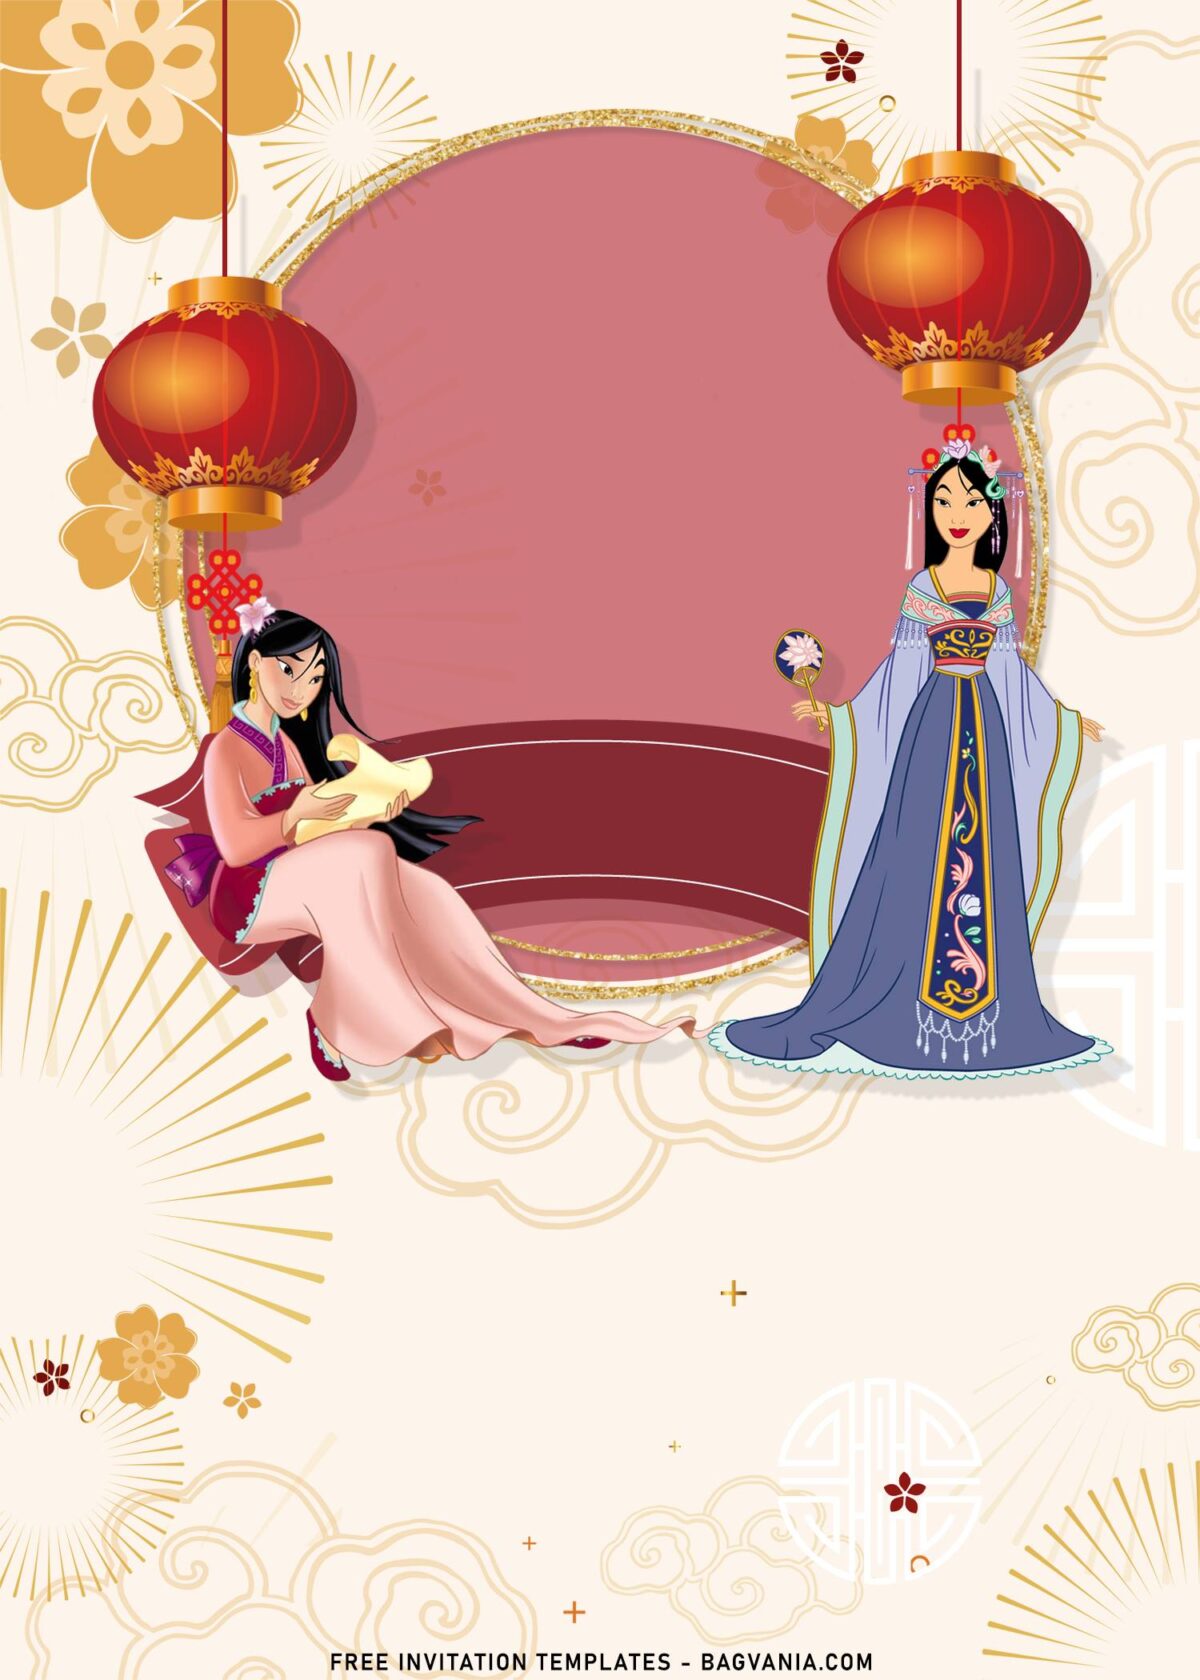 8+ Princess Mulan Birthday Invitation Templates with Chinese pattern background